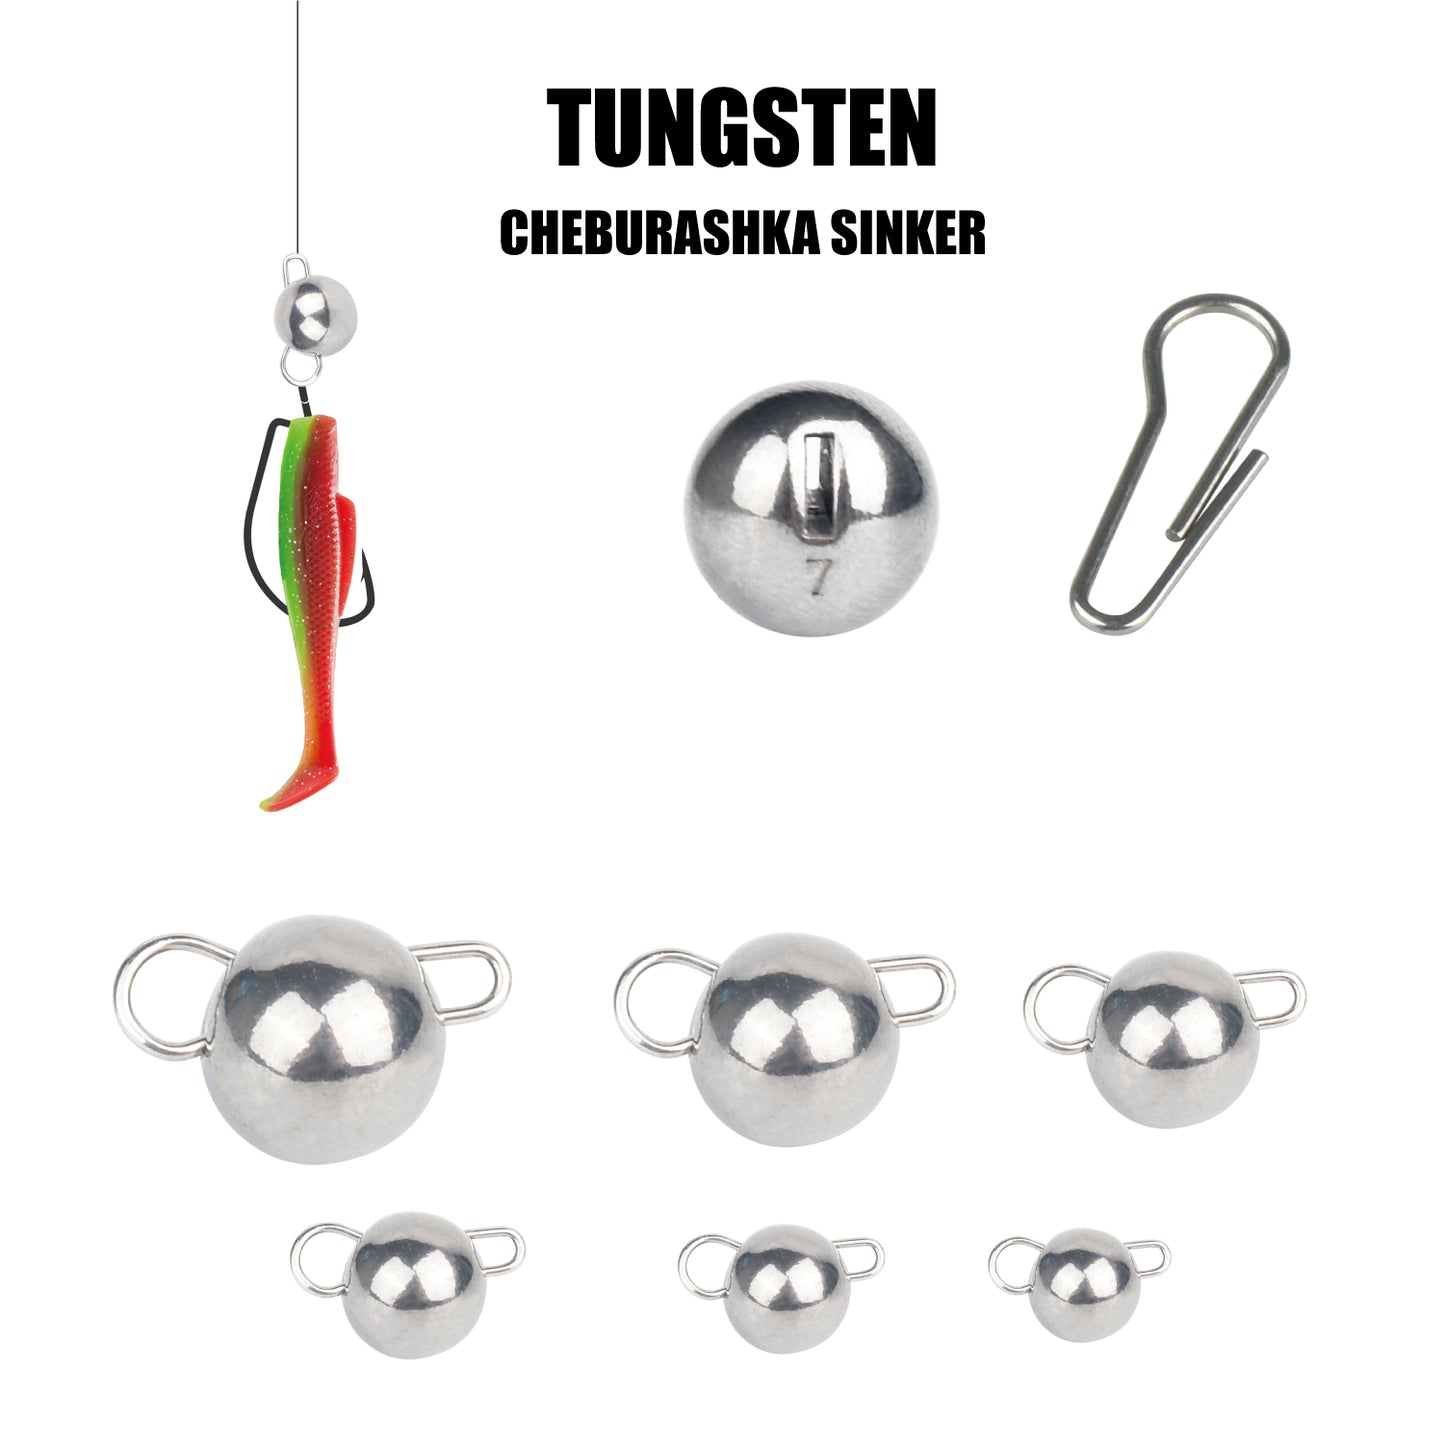 MUUNN 10PCS Tungsten Cheburashka Sinker,Fishing Weight,1G/1.5G/2G/3G/5G/7G,  Tackle For Soft Worm Bait,Bass Perch Salmon Lures